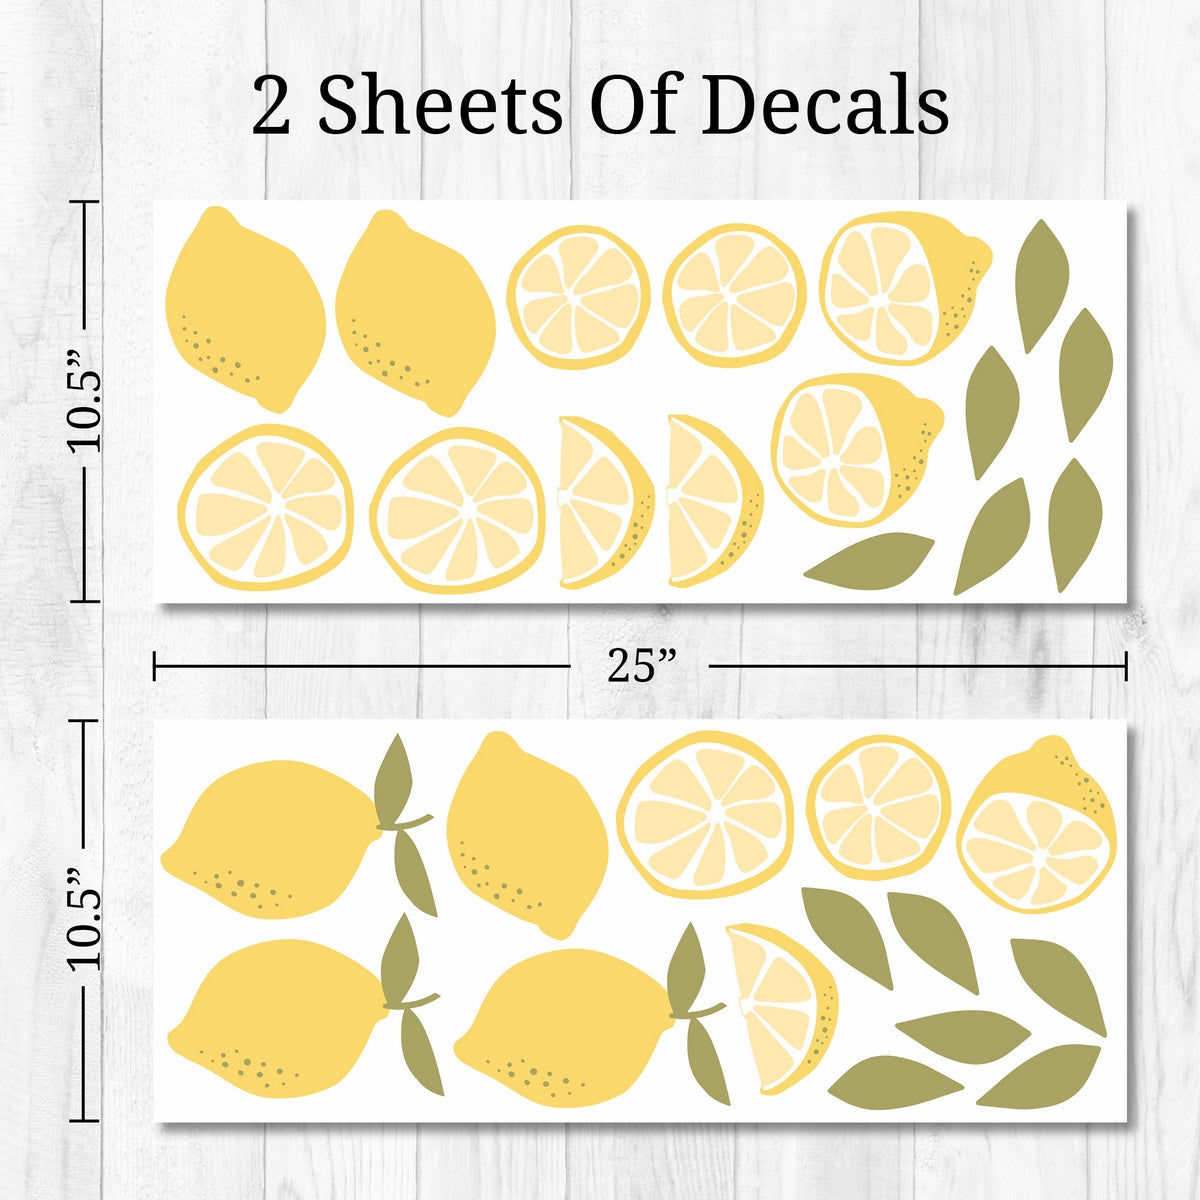 Kitchen Lemons Wall Decals